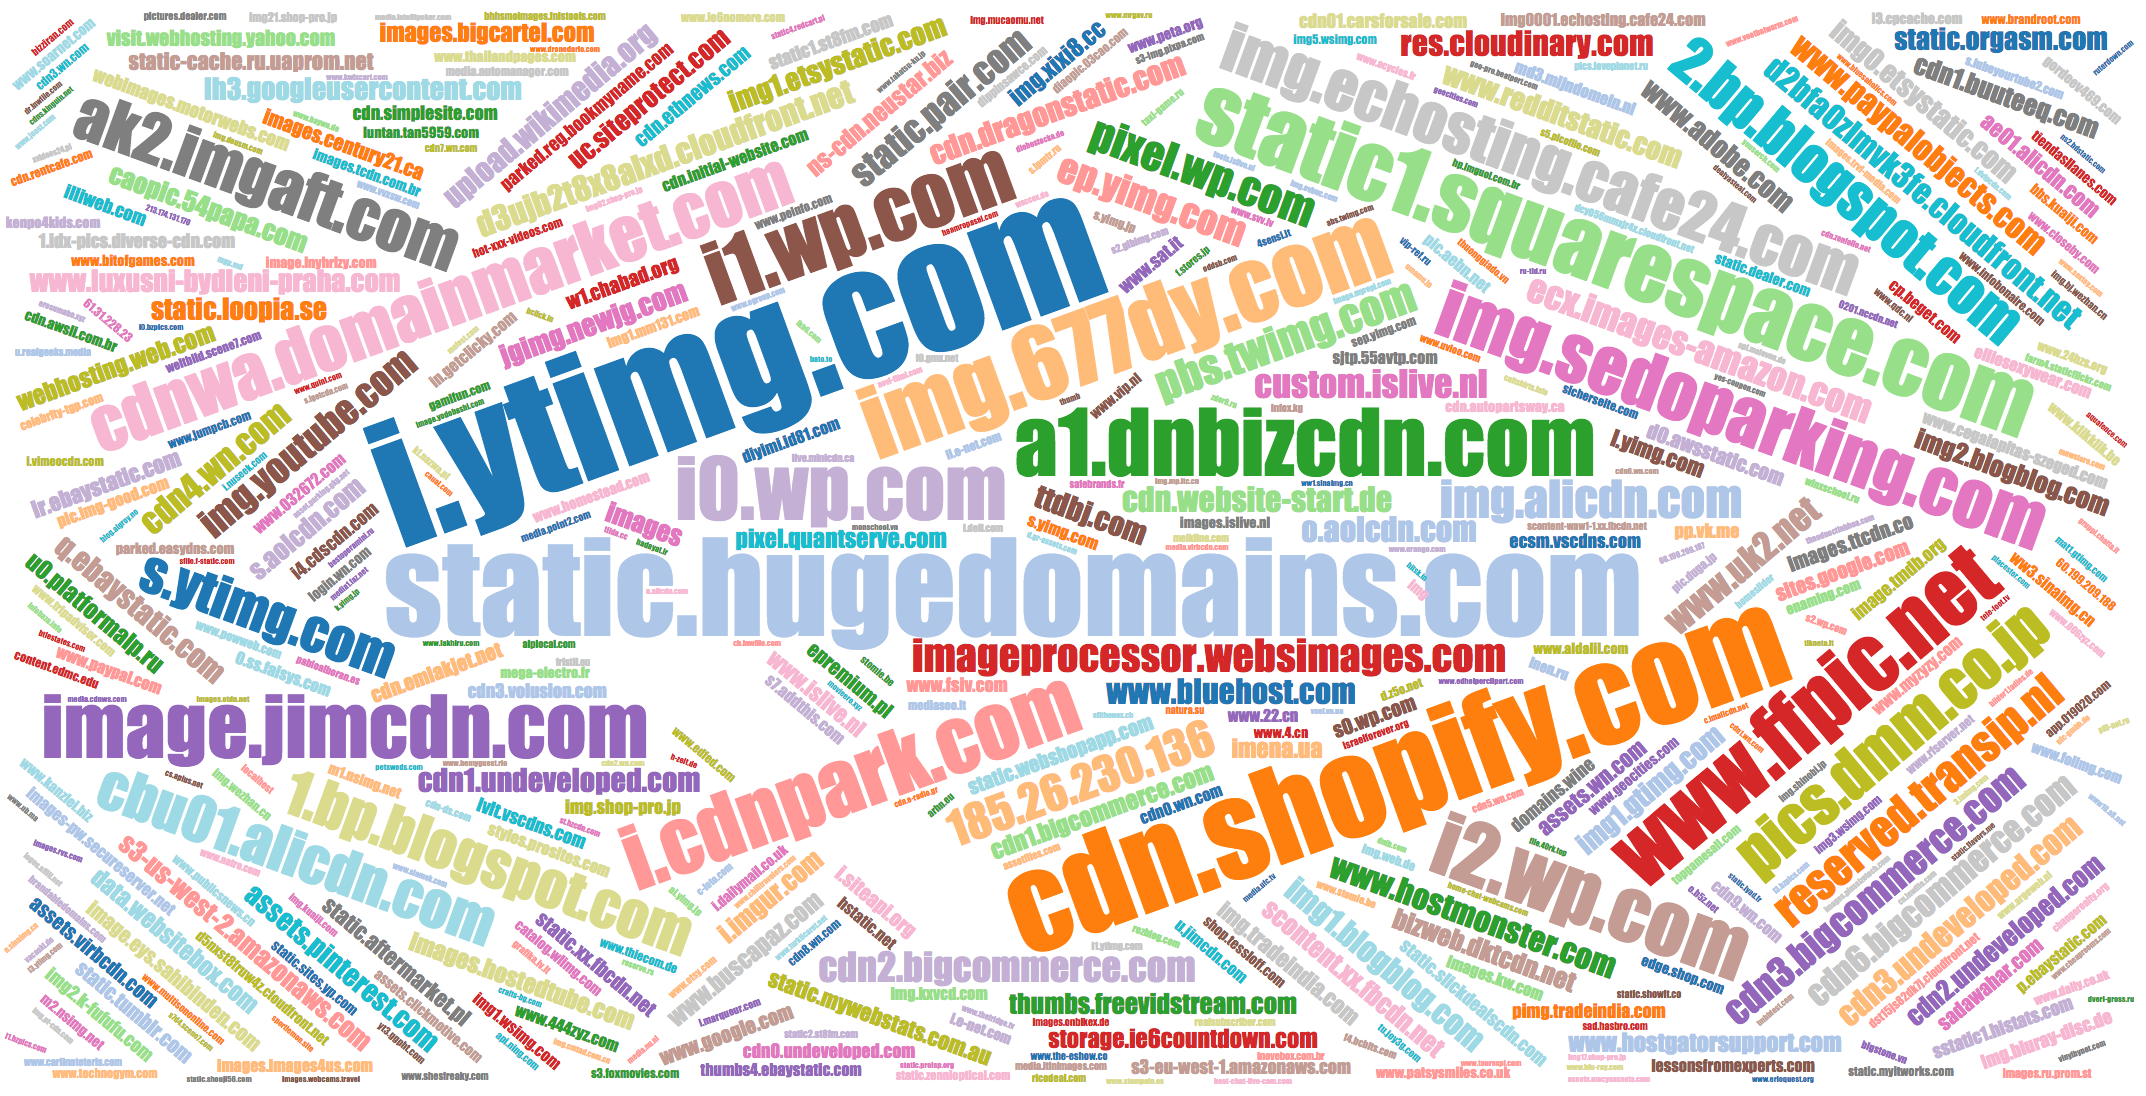 Popular names of IMG domains homepage.t-online.de, homevisit.s3.amazonaws.com, etc.